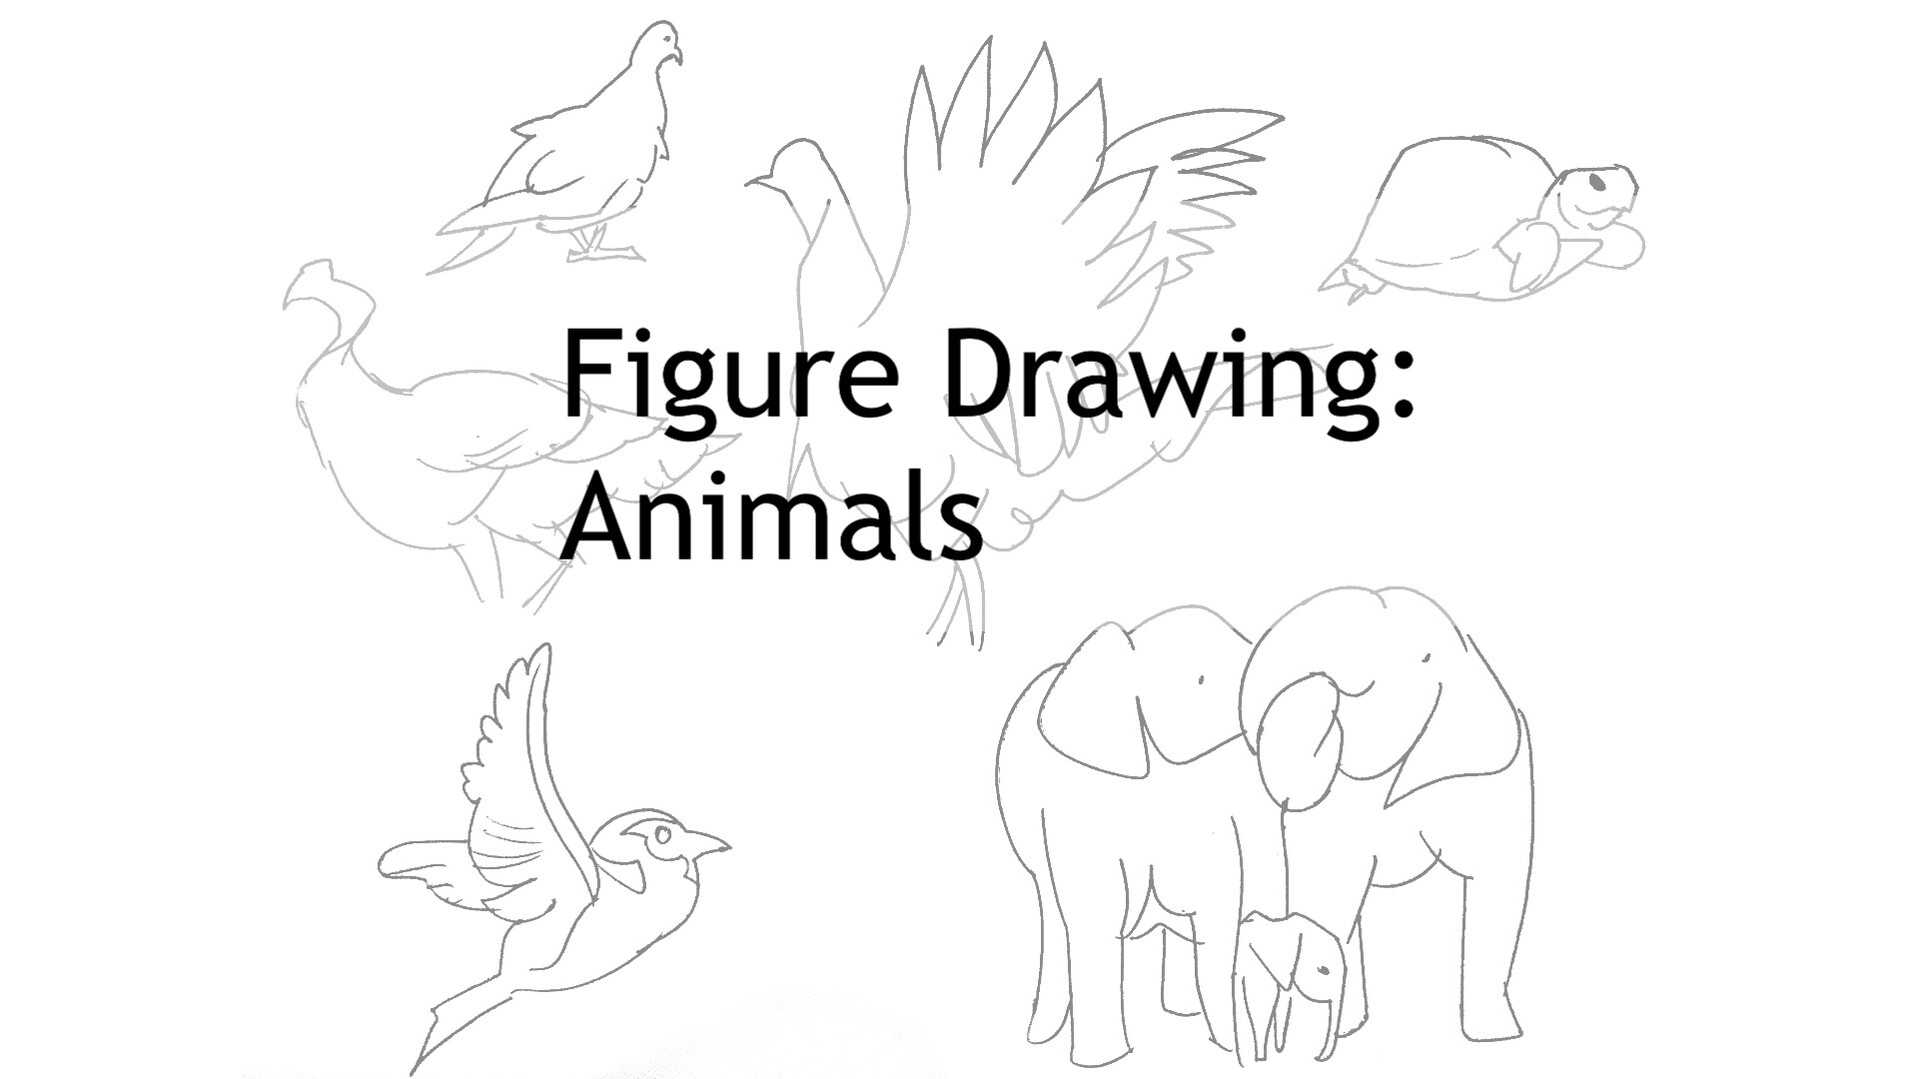 ArtStation - FigureDrawing:Animals